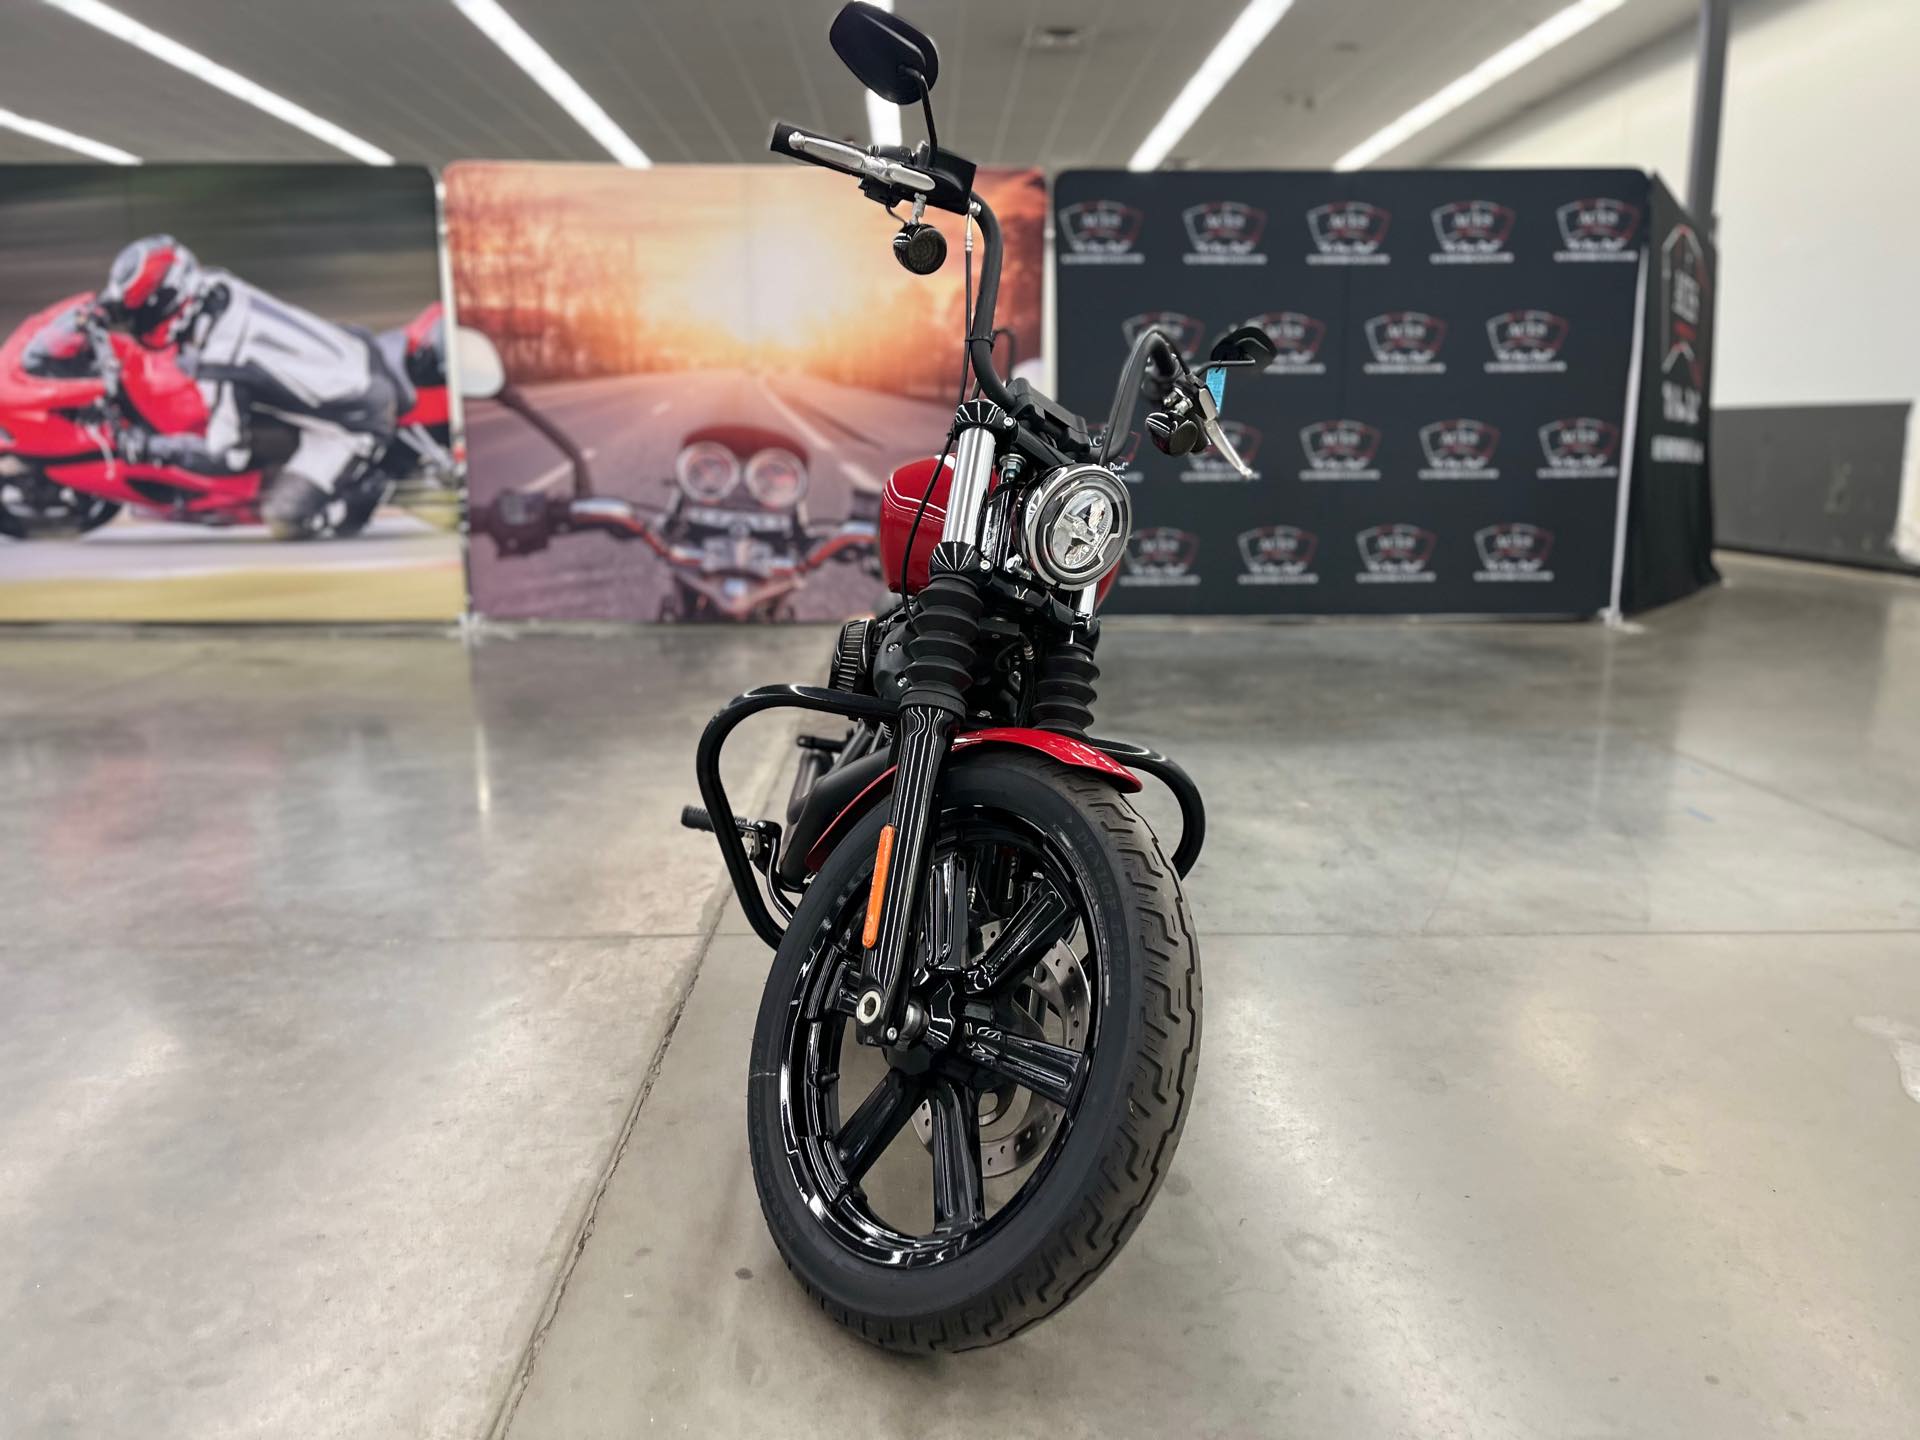 2022 Harley-Davidson Softail Street Bob 114 at Aces Motorcycles - Denver